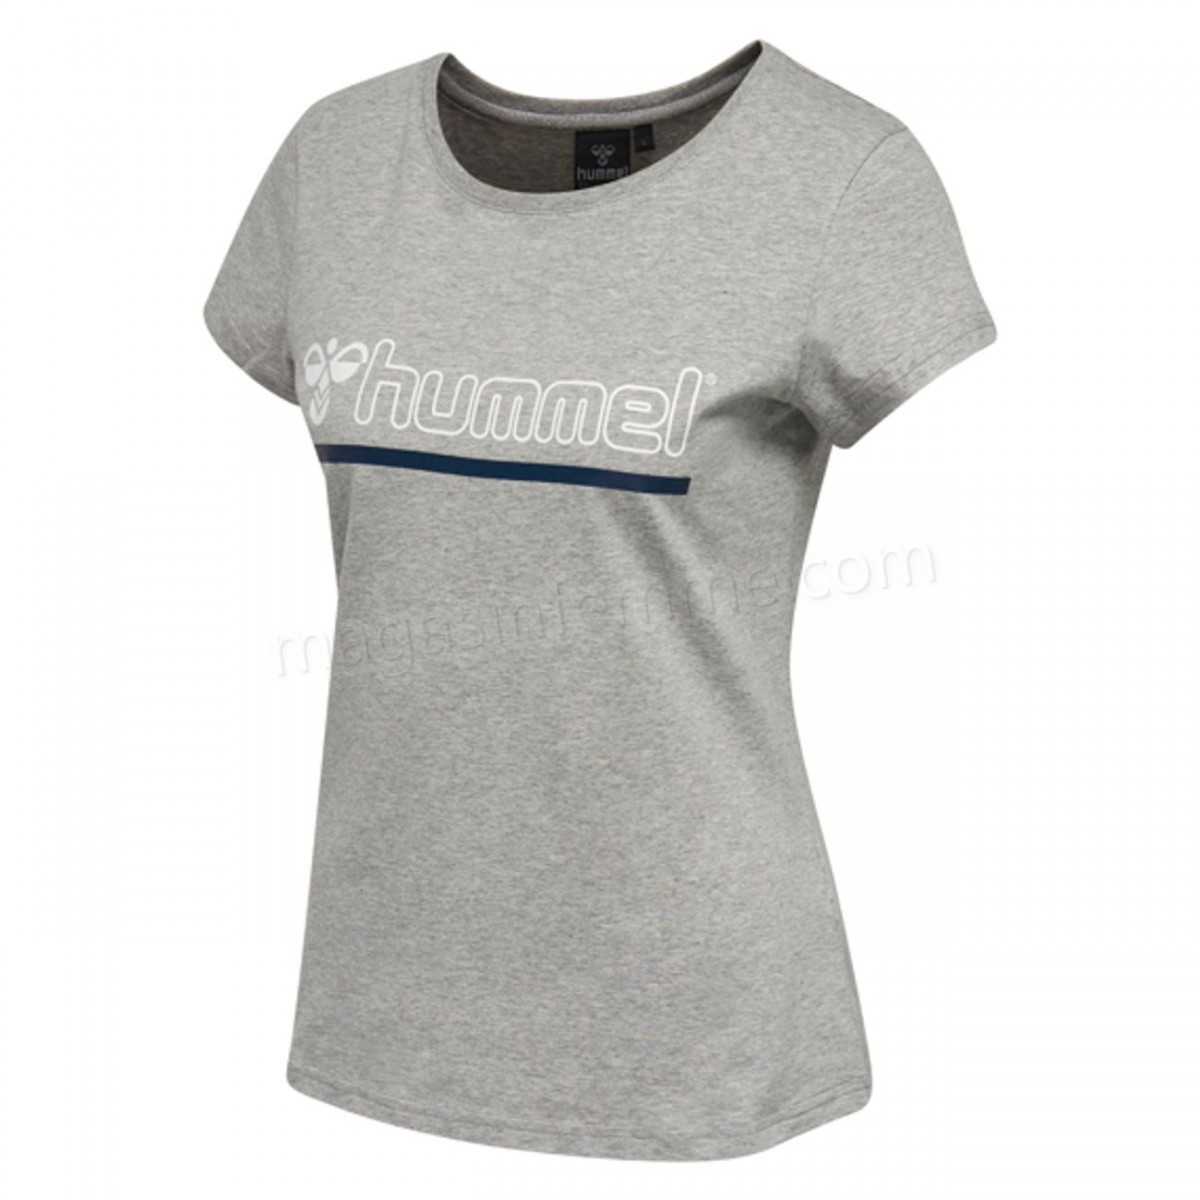 Hummel-Fitness femme HUMMEL T-shirt femme Hummel Classic bee Perla en solde - -3